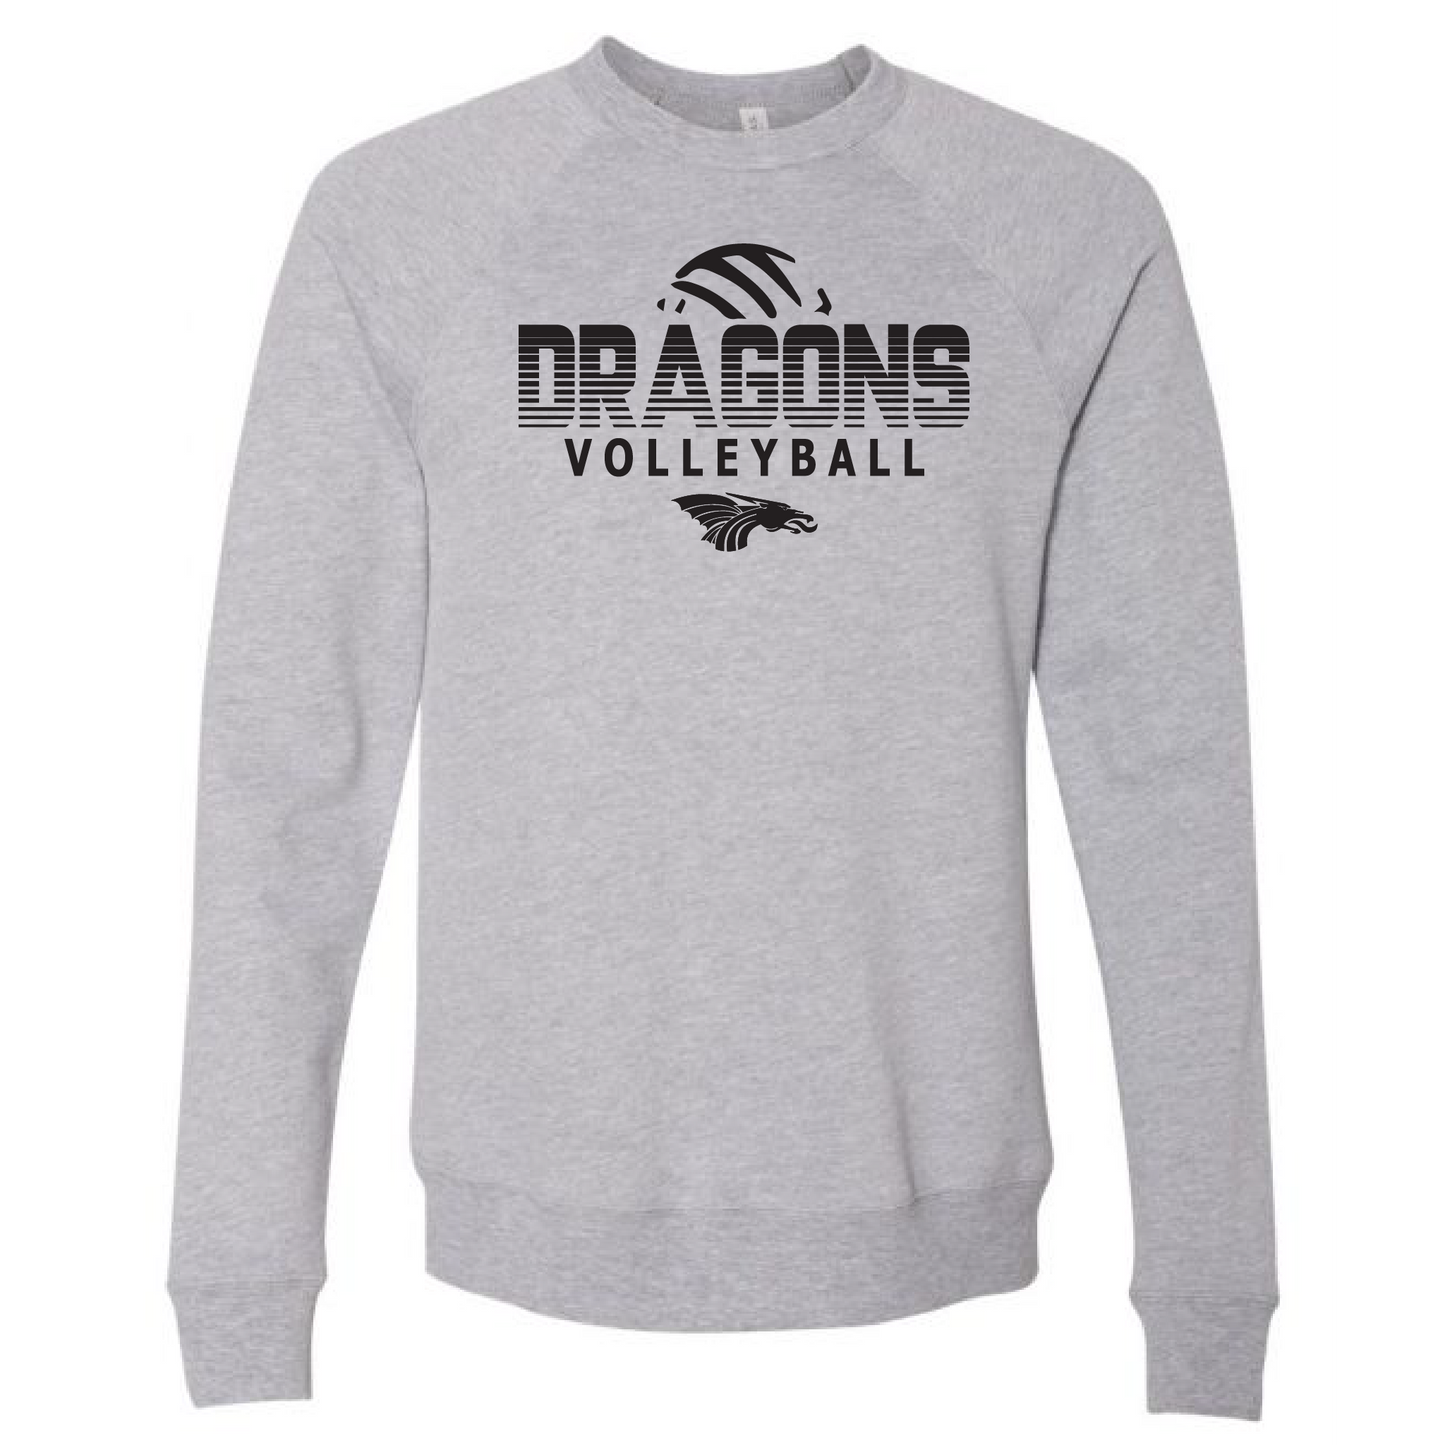 Unisex Sweatshirt - Dragons Volleyball